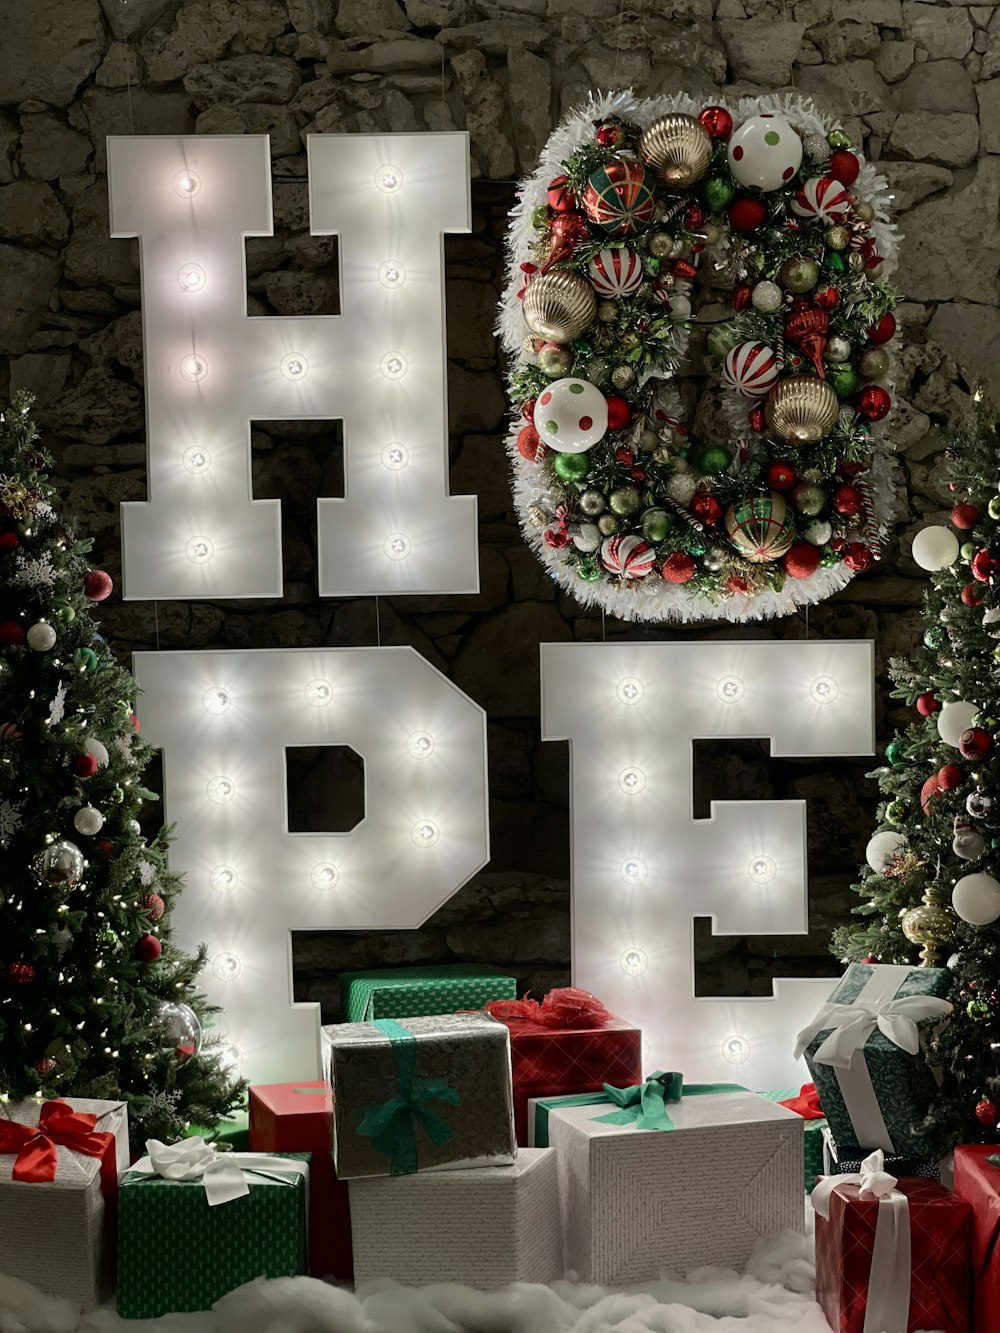 a christmas display with presents and lights